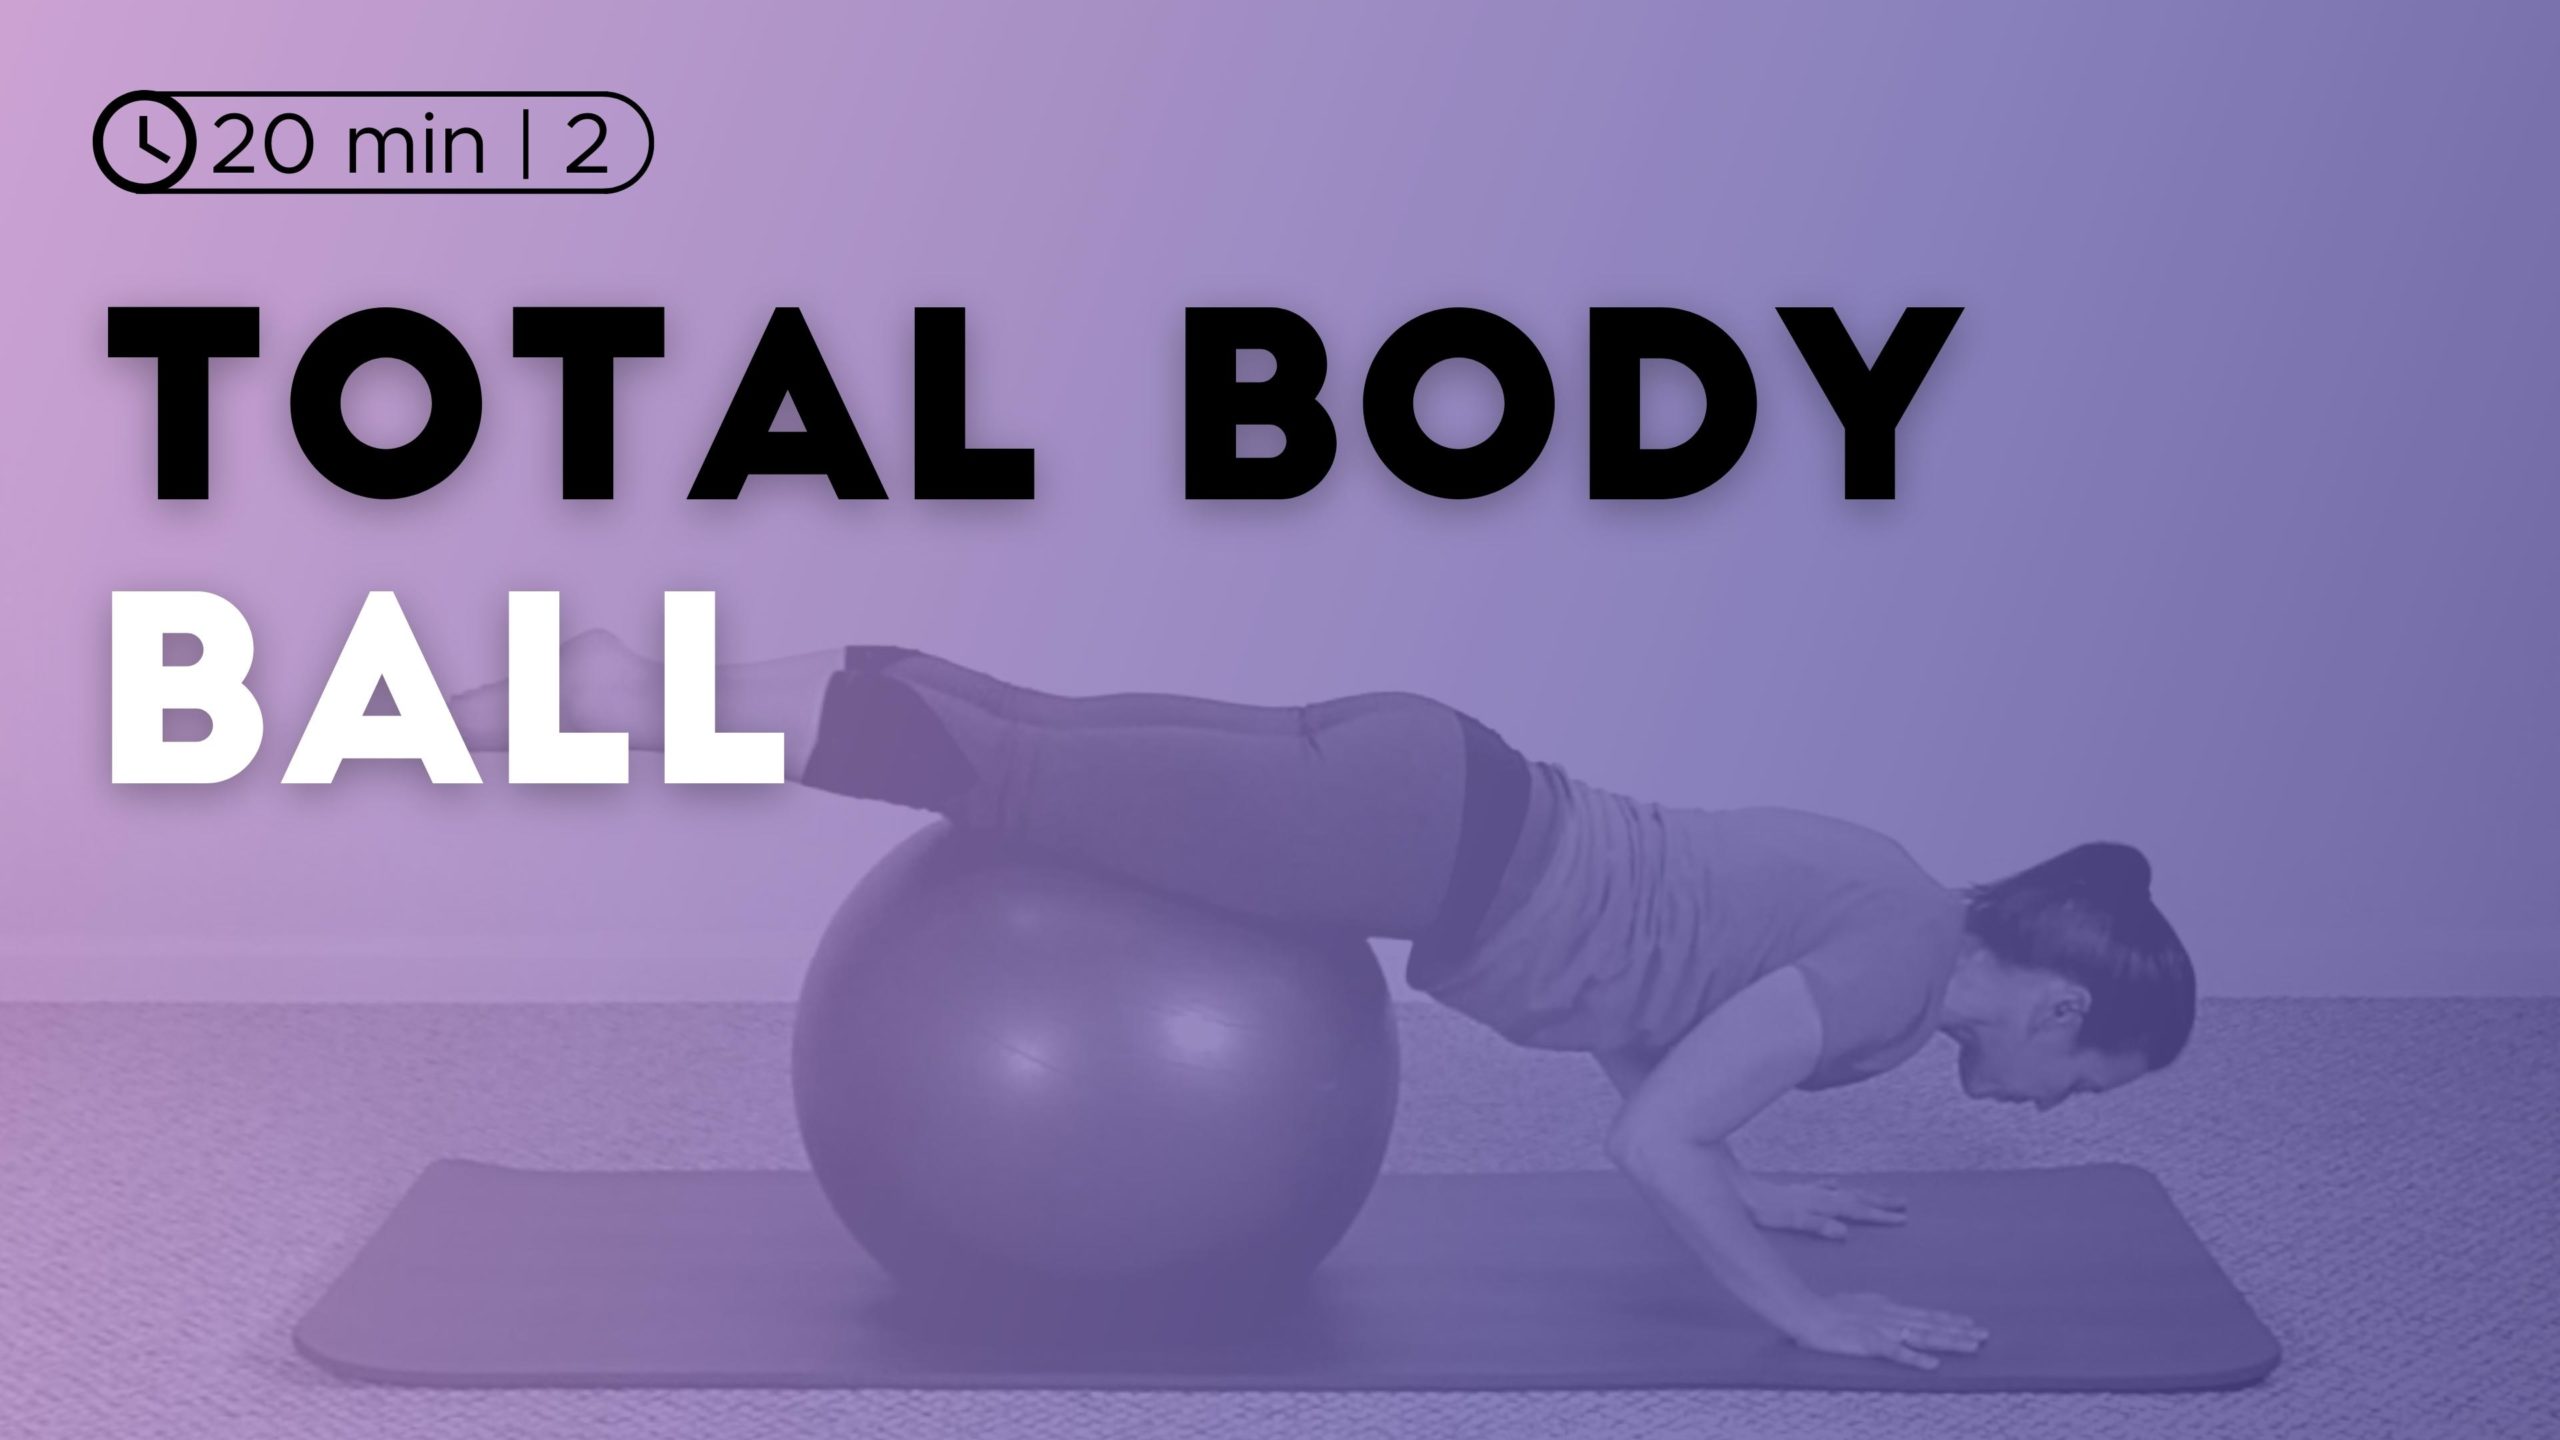 Total Body Ball Workout